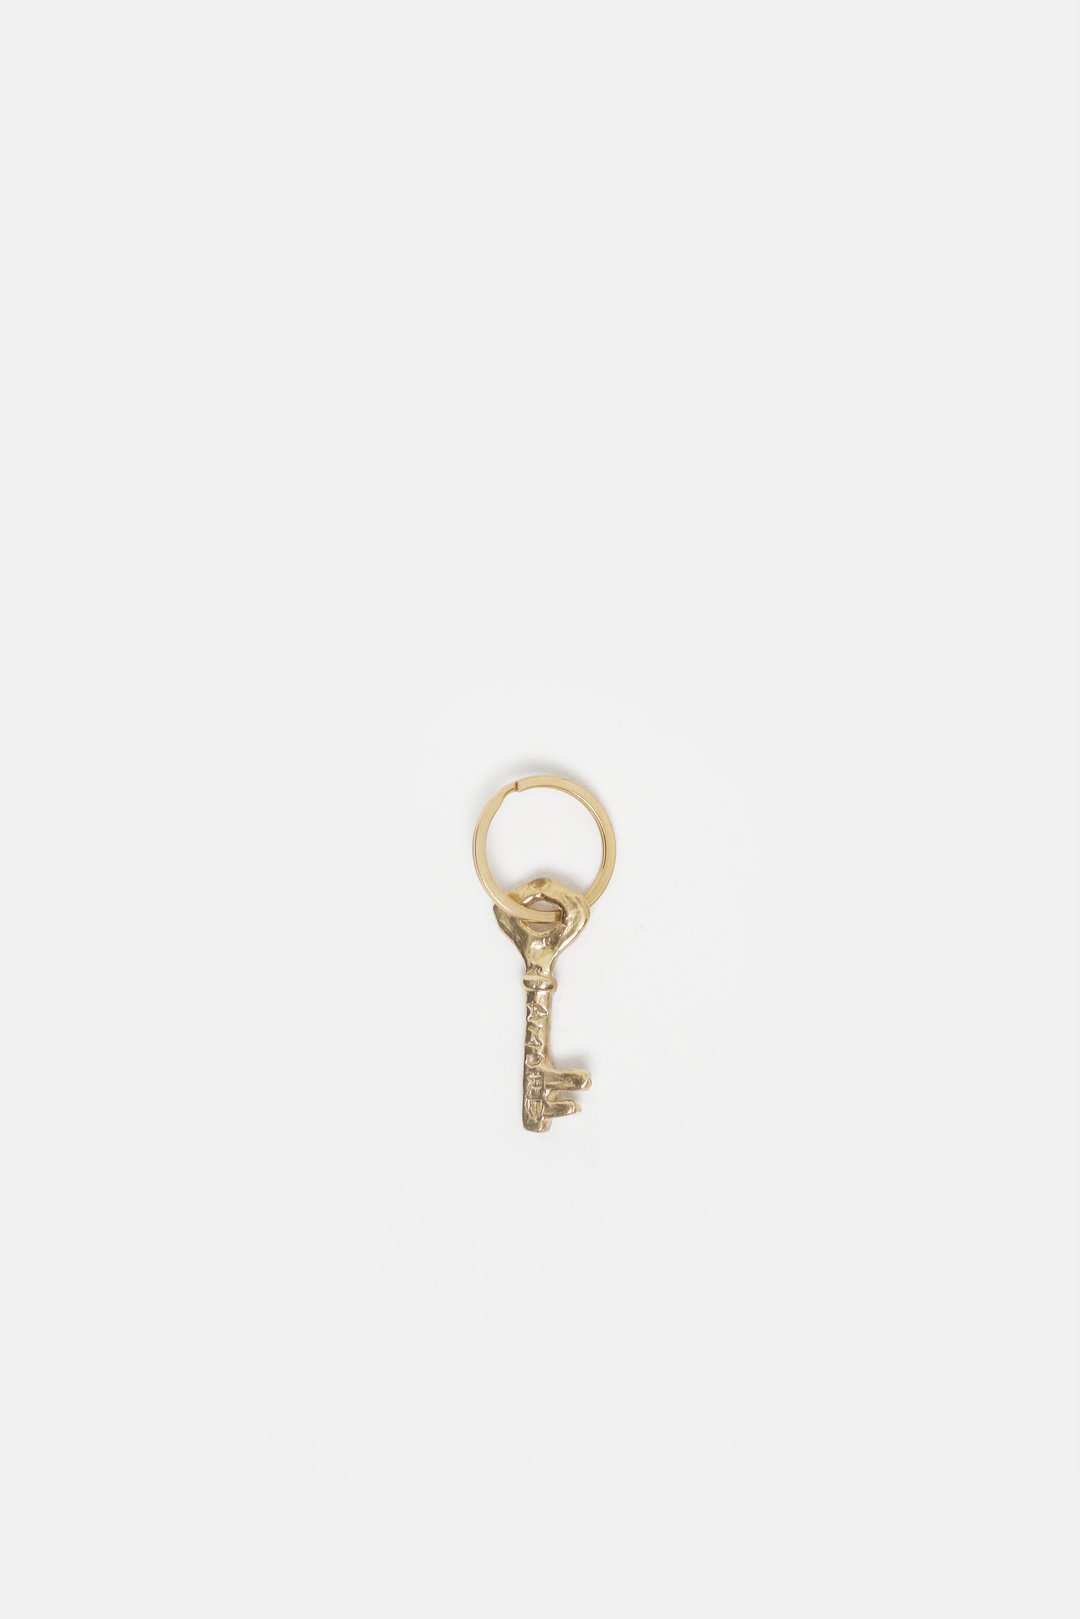 Amazon.com: CRAFTMEMORE Key Rings Quality Keychain Rings Metal Flat Split  Rings for Car Keys Attachment DIY Leathercraft 10pcs VTKR (1 3/16